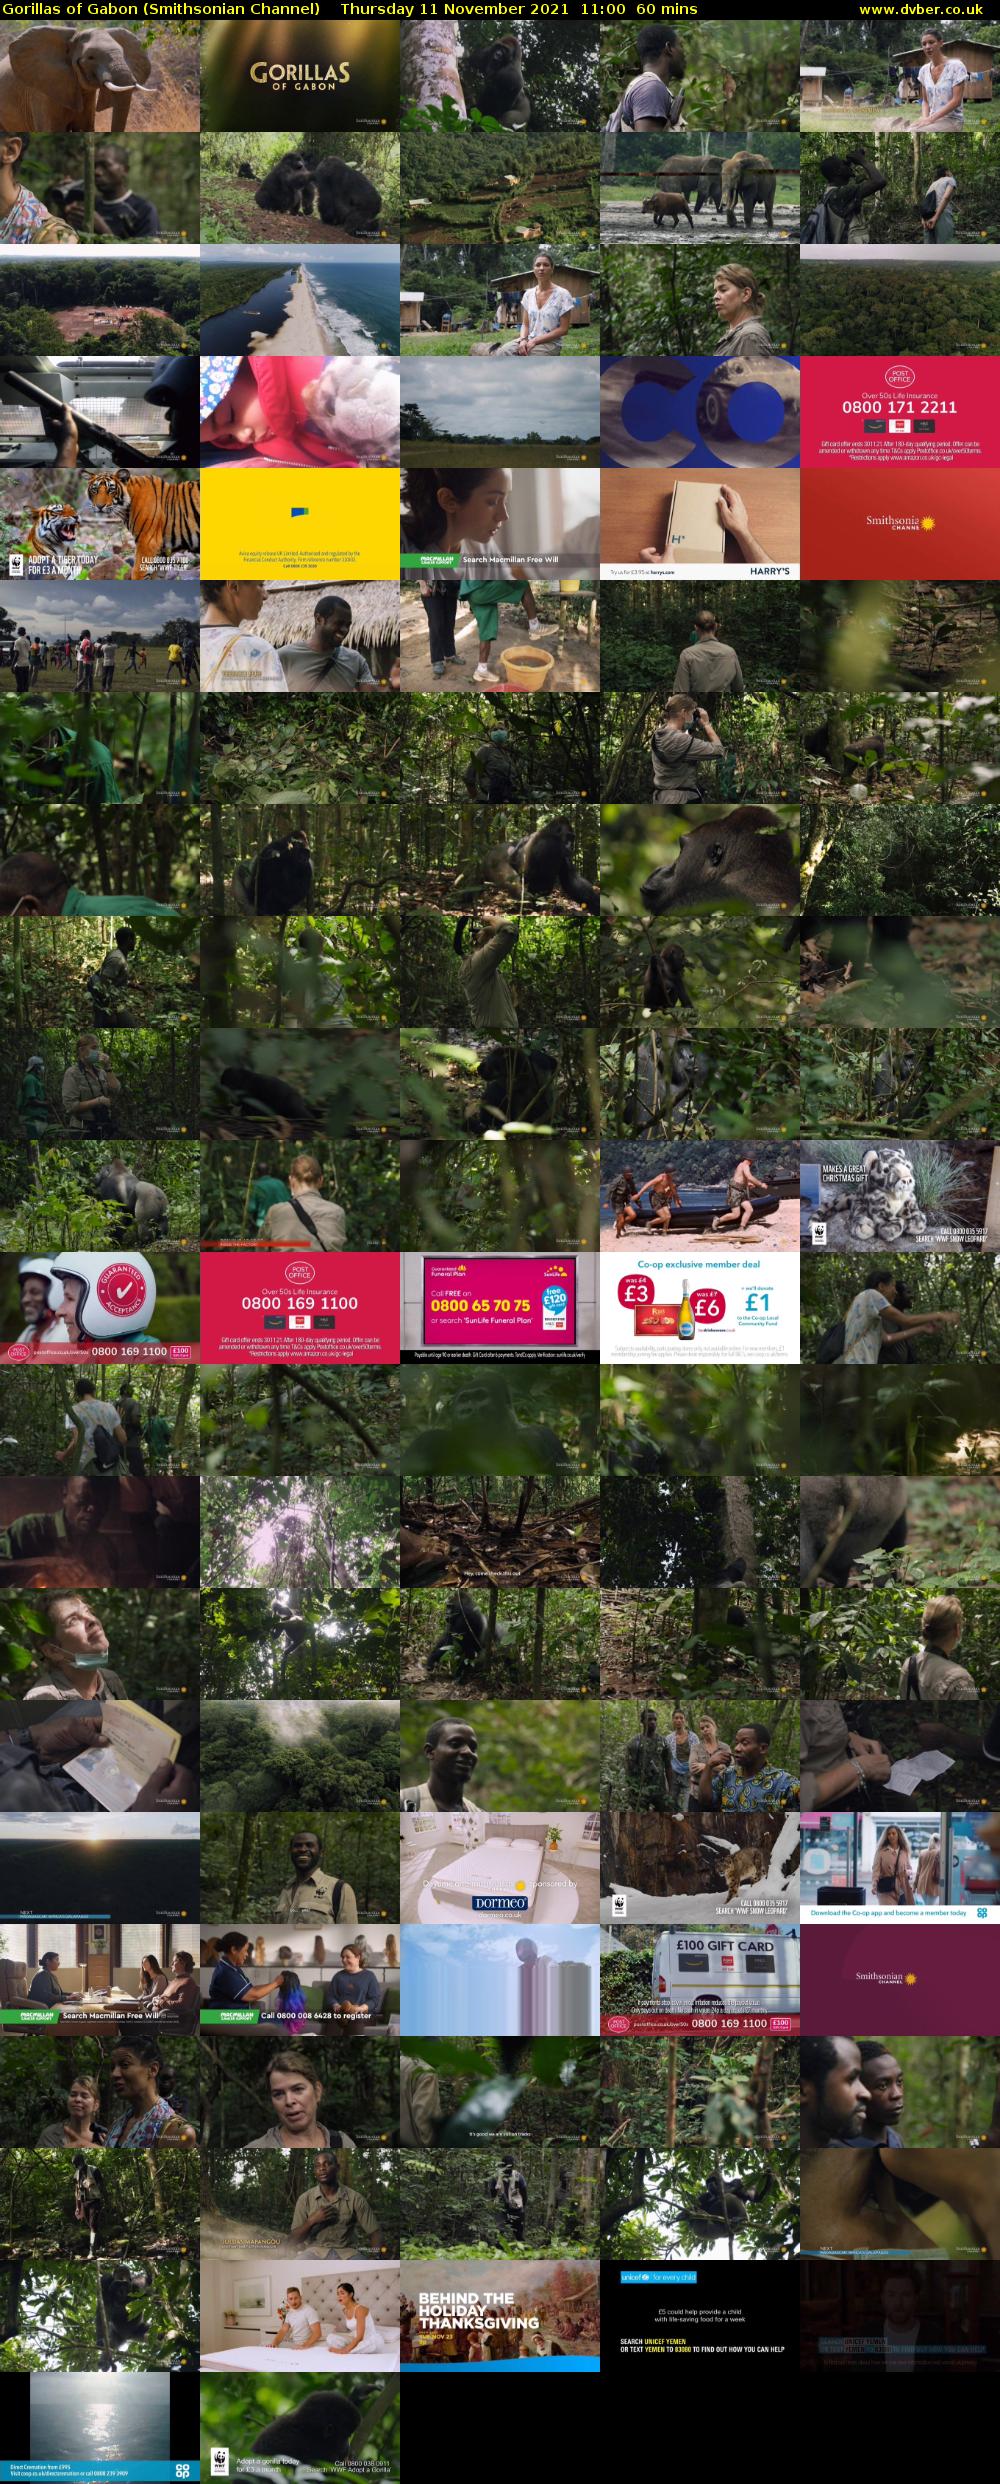 Gorillas of Gabon (Smithsonian Channel) Thursday 11 November 2021 11:00 - 12:00